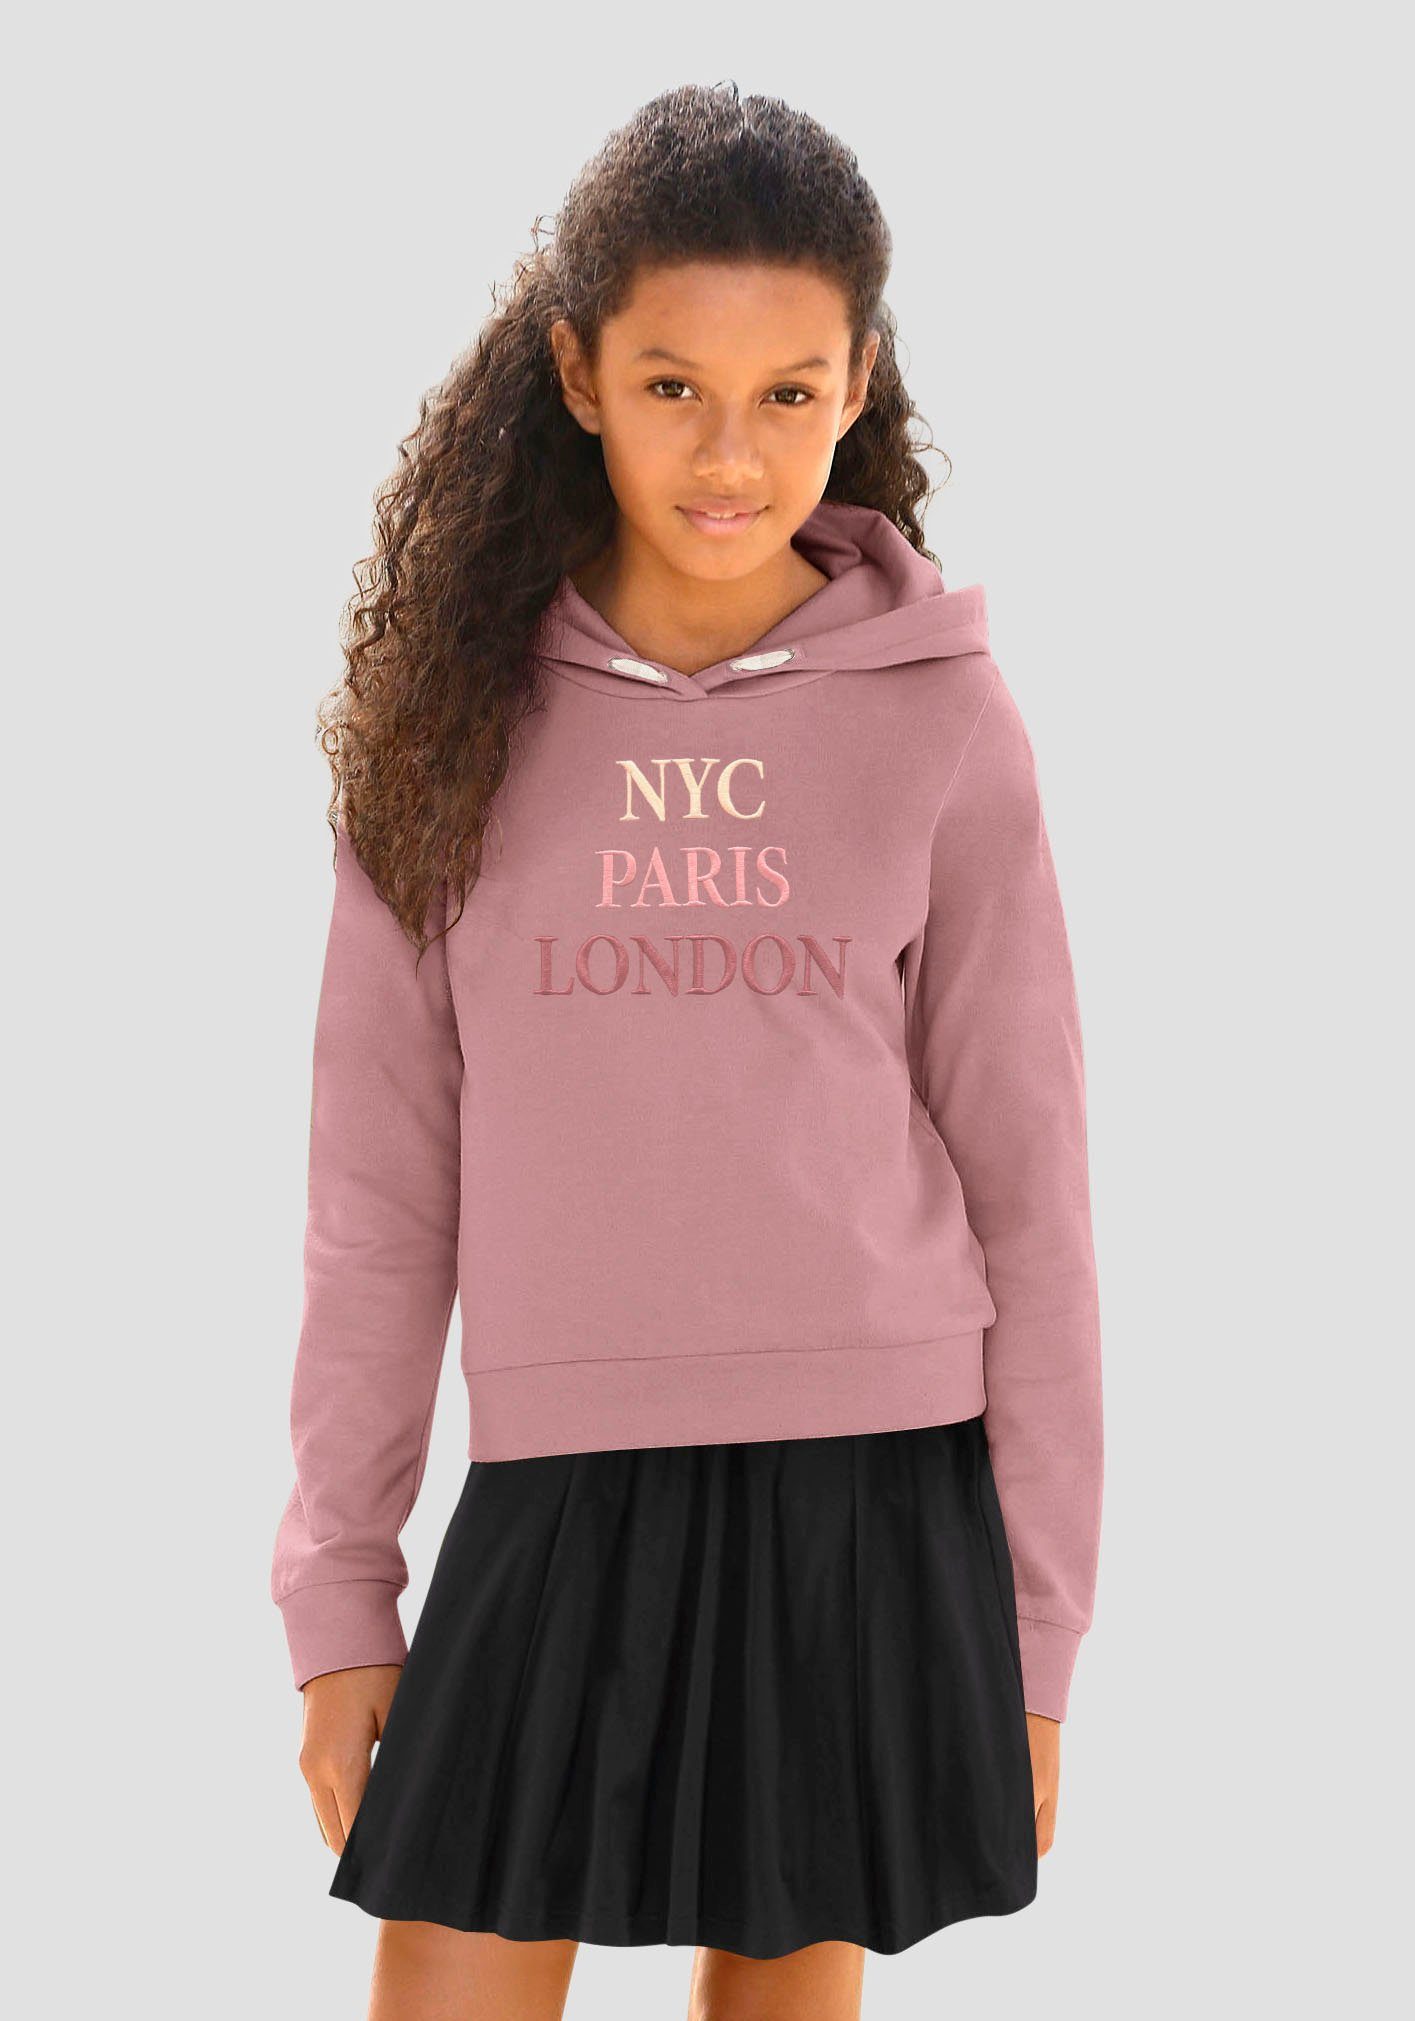 KIDSWORLD Kapuzensweatshirt NYC Paris London mit Stickerei | Sweatshirts